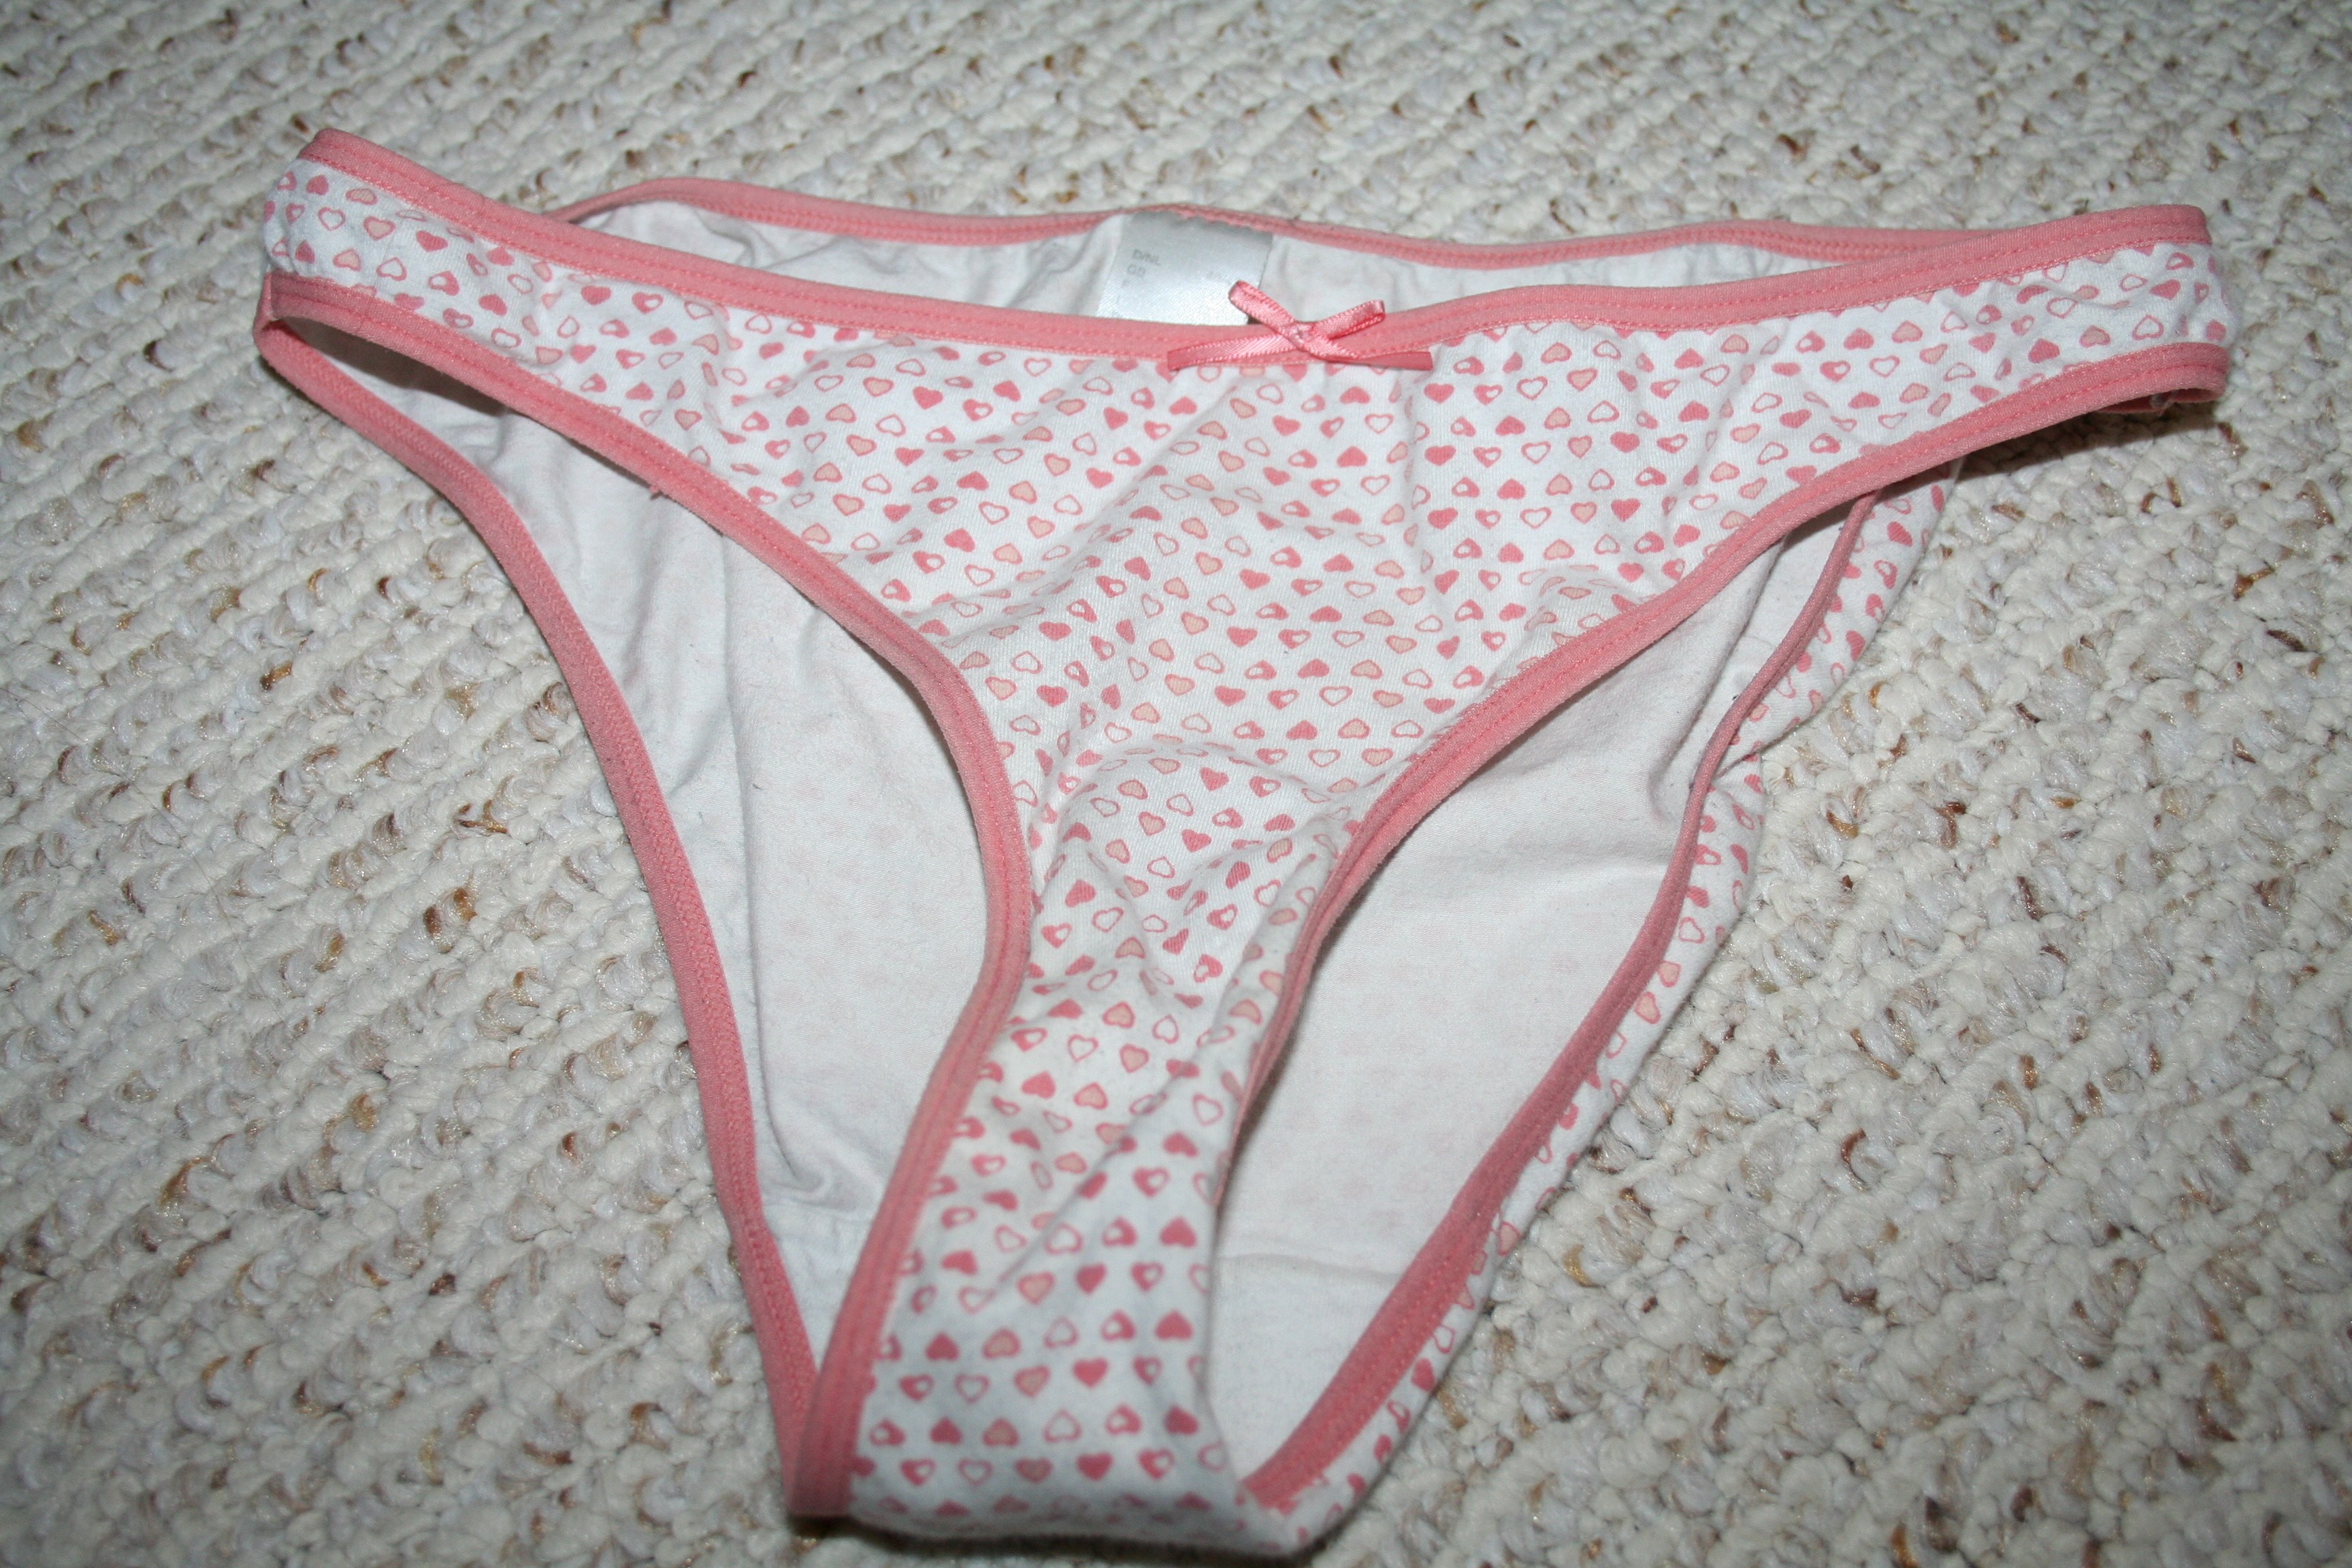 My Ex-Girls Panties.